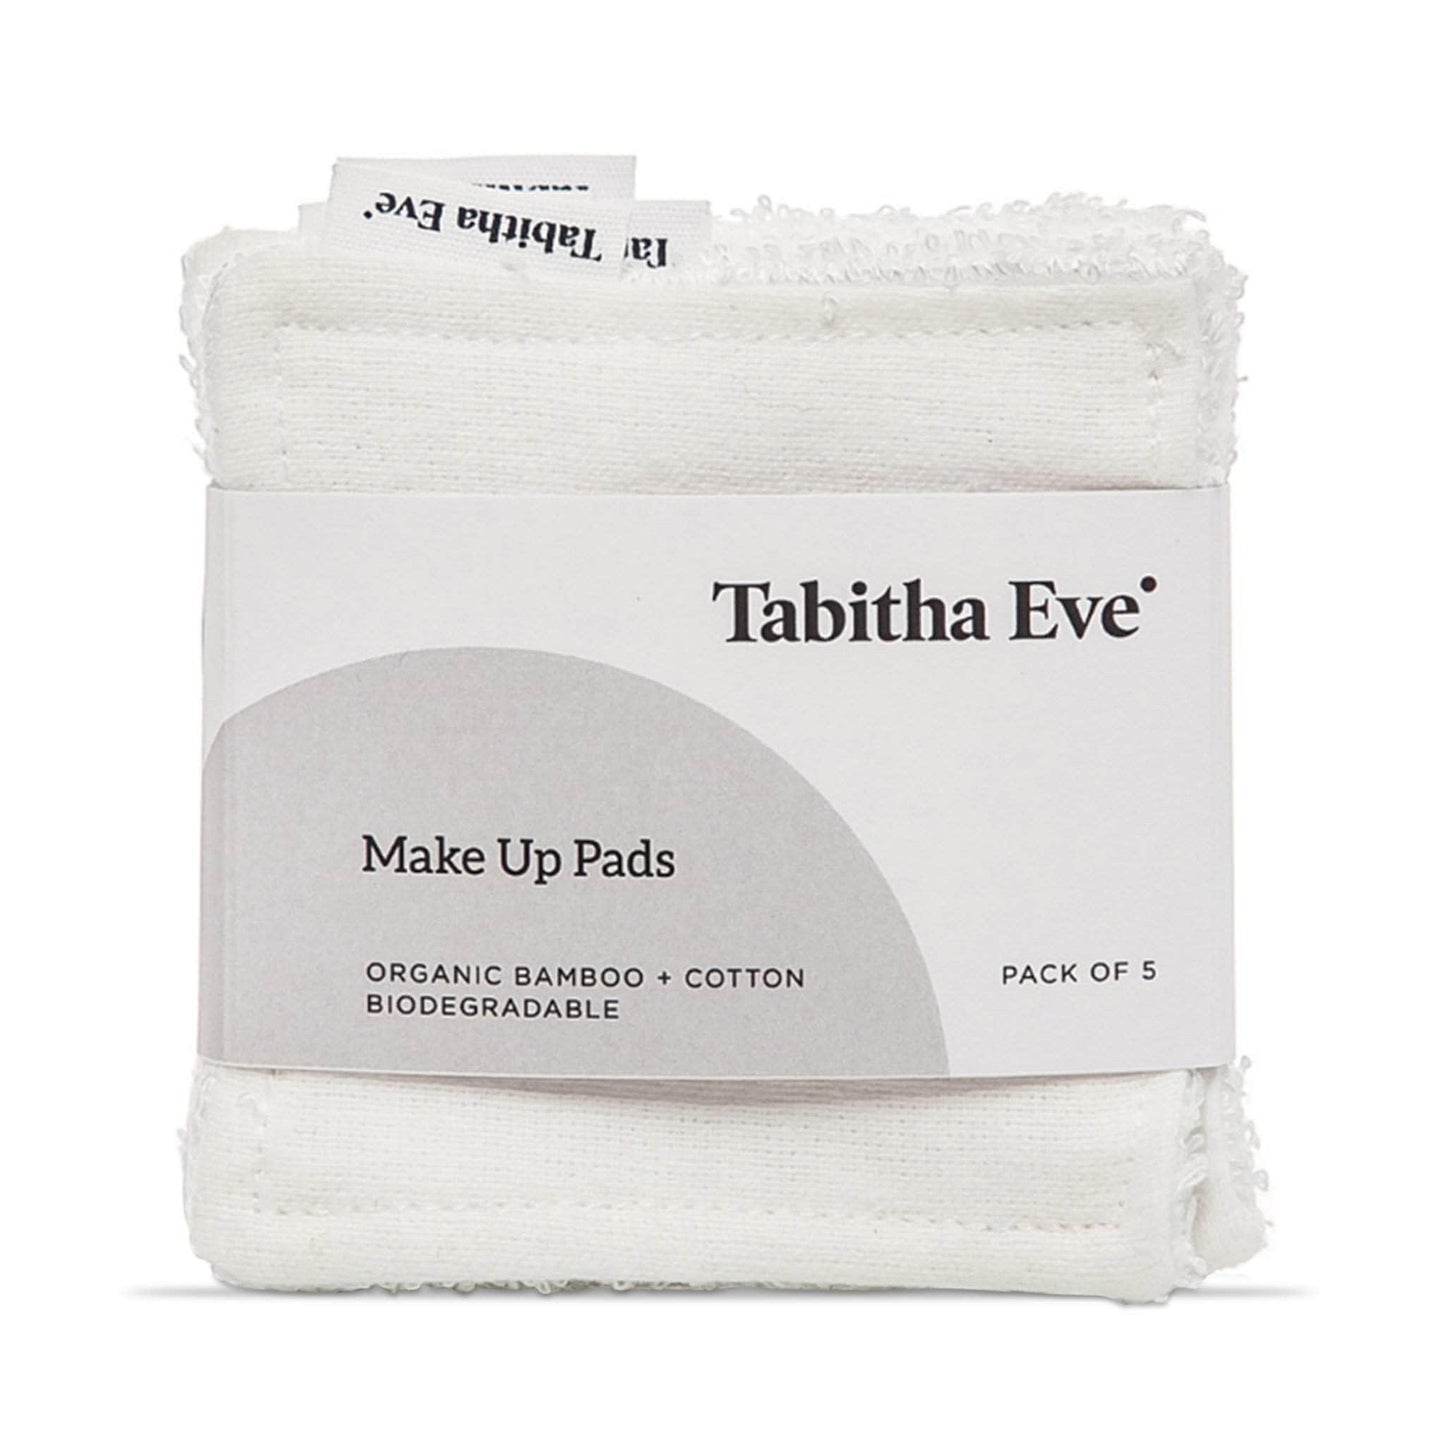 Tabitha Eve Make Up Soft White Tabitha Eve - Reusable Bamboo & Cotton Make Up Pads - Set of 3